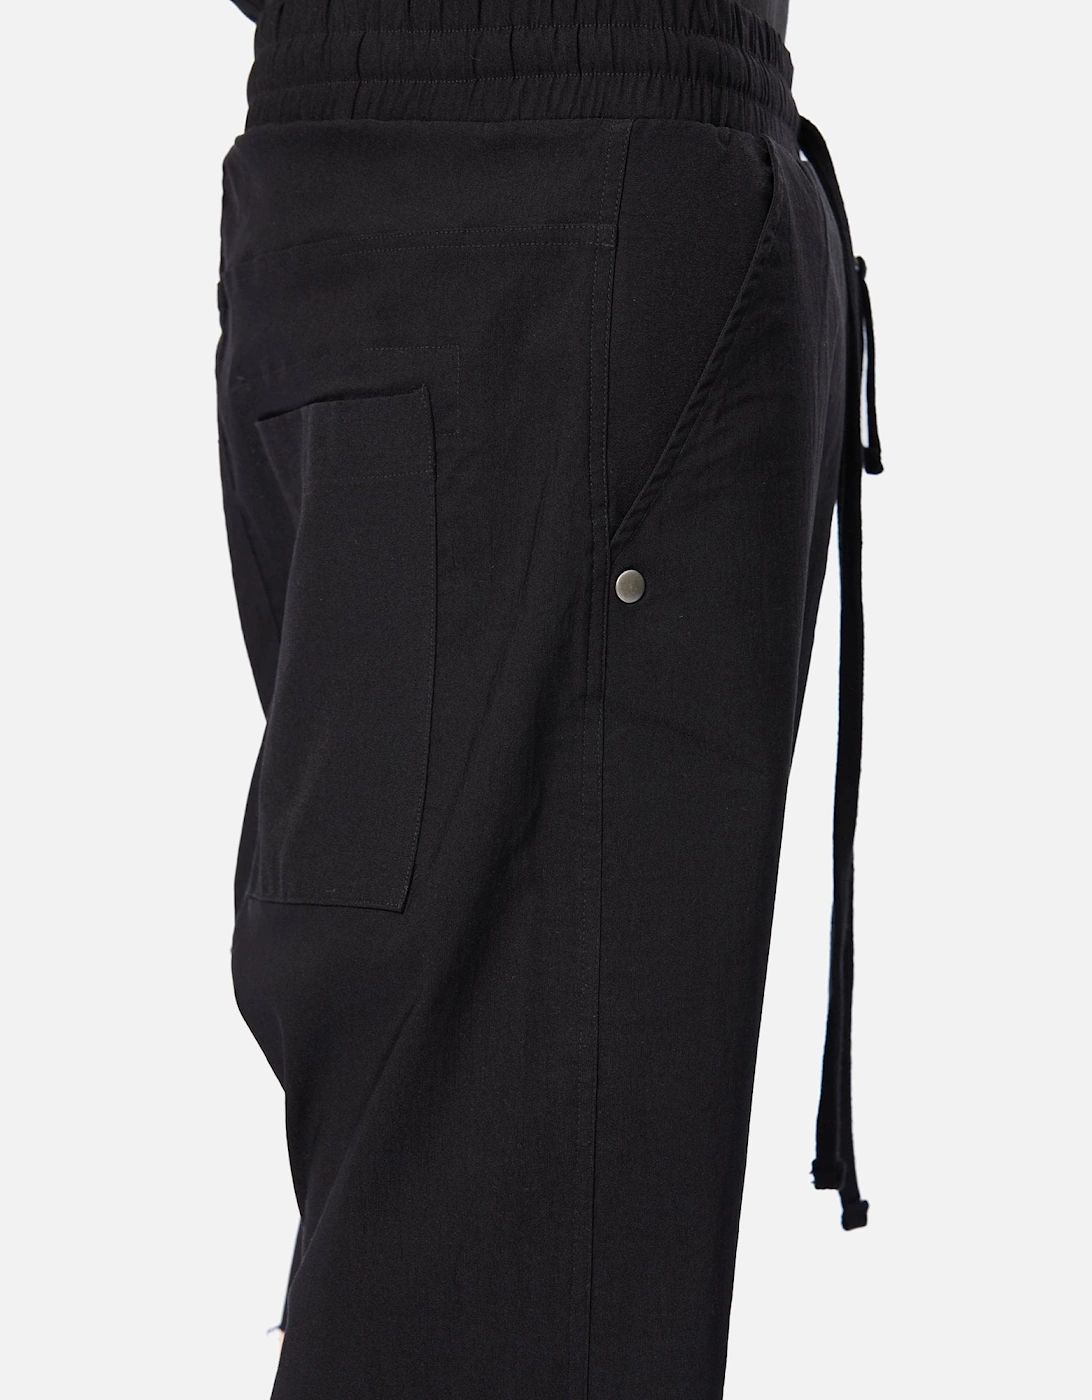 Zip Detail Drop Black Shorts